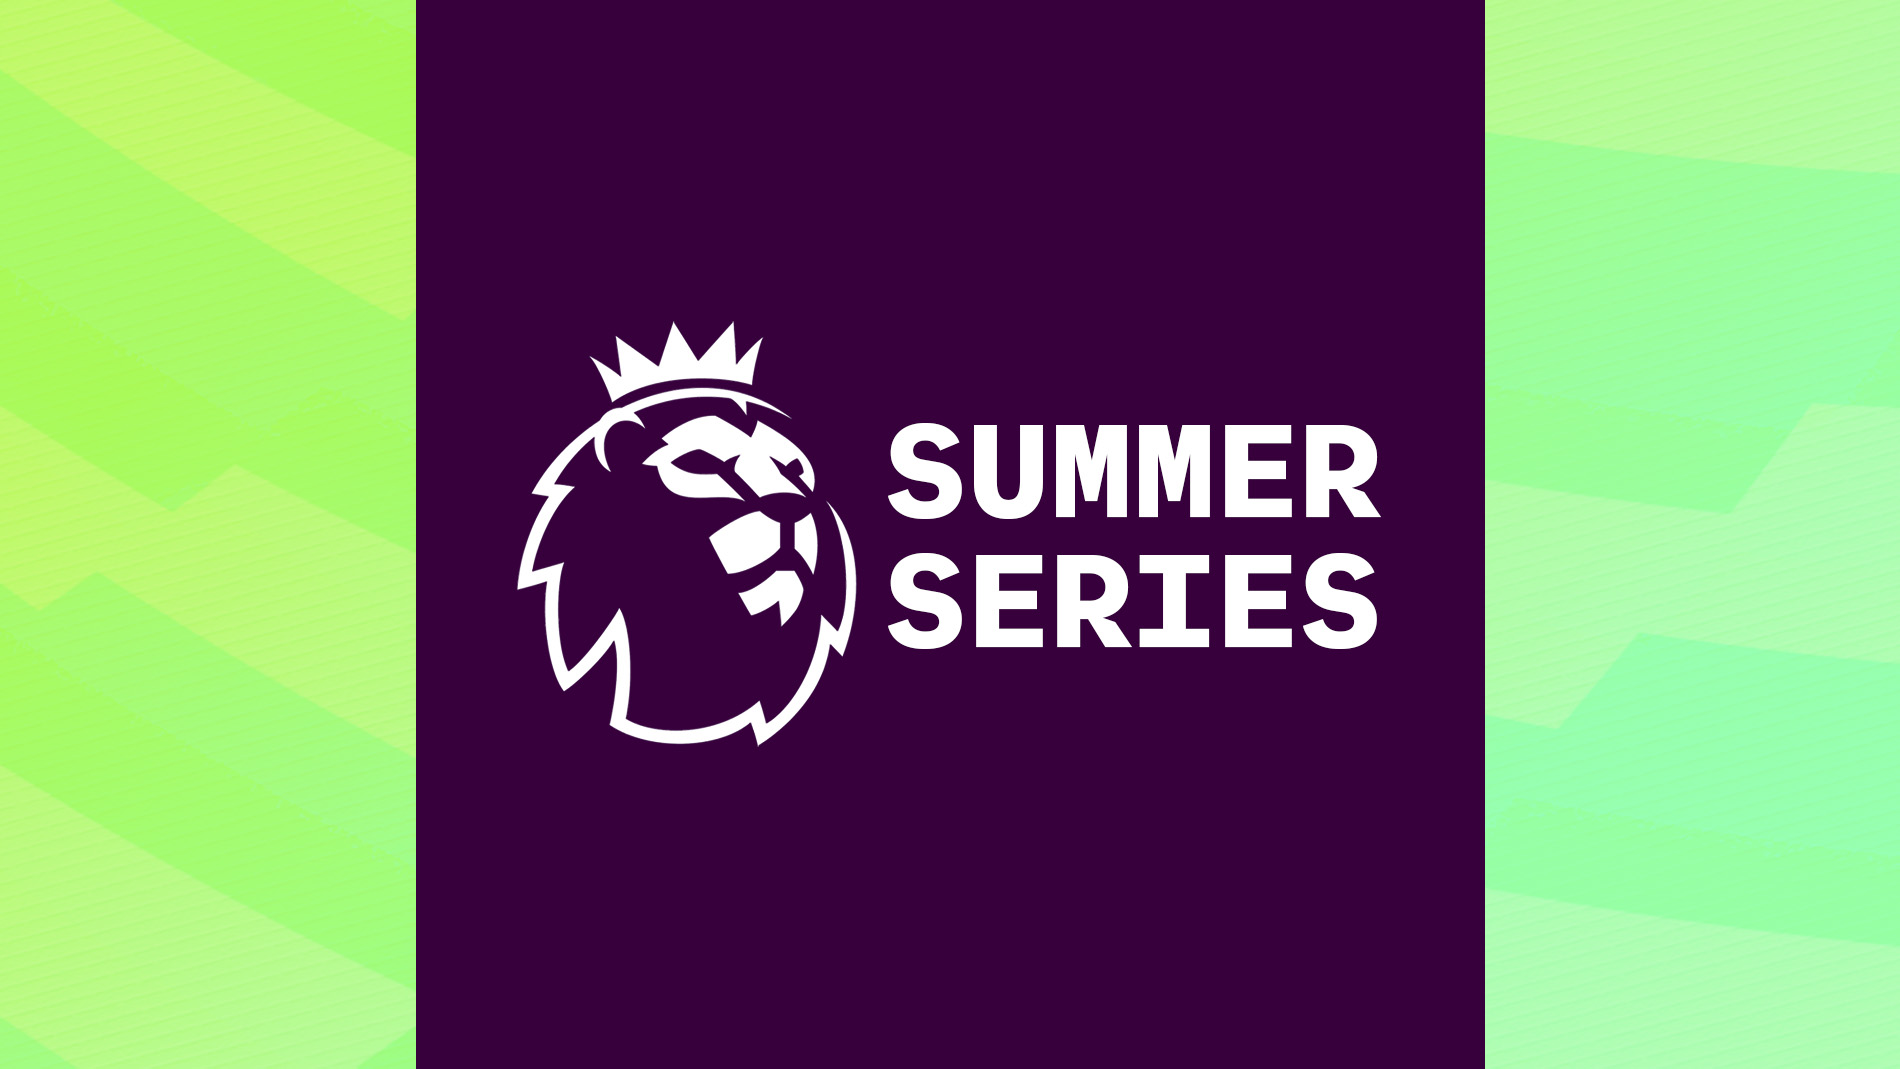 Premier League Summer Series